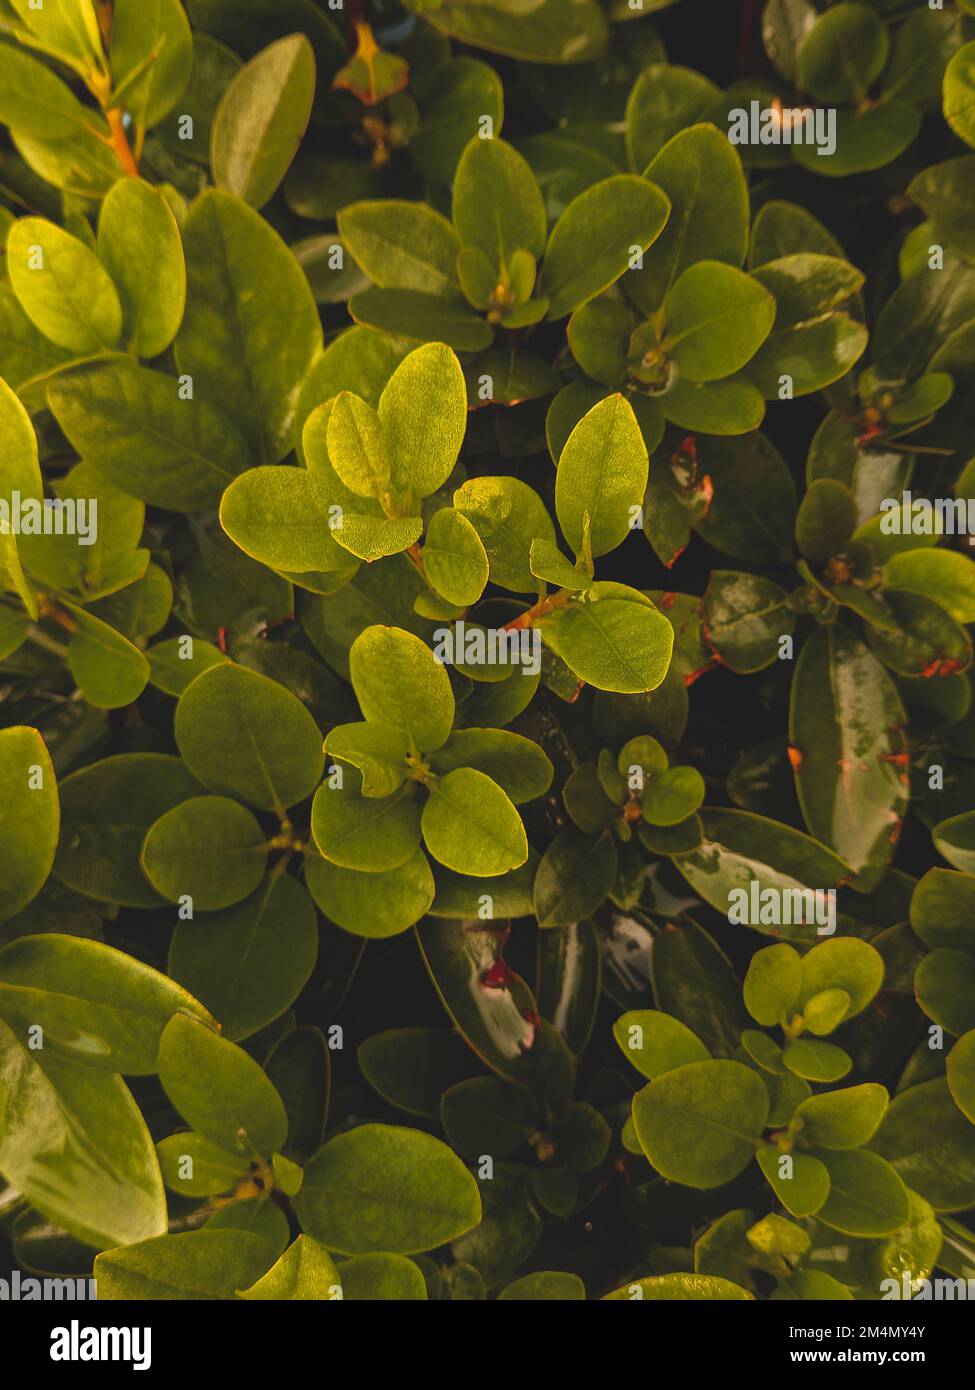 Boxwood leaf texture. Lush leaves background. Buxus Sempervirens Rotundifolia. Stock Photo